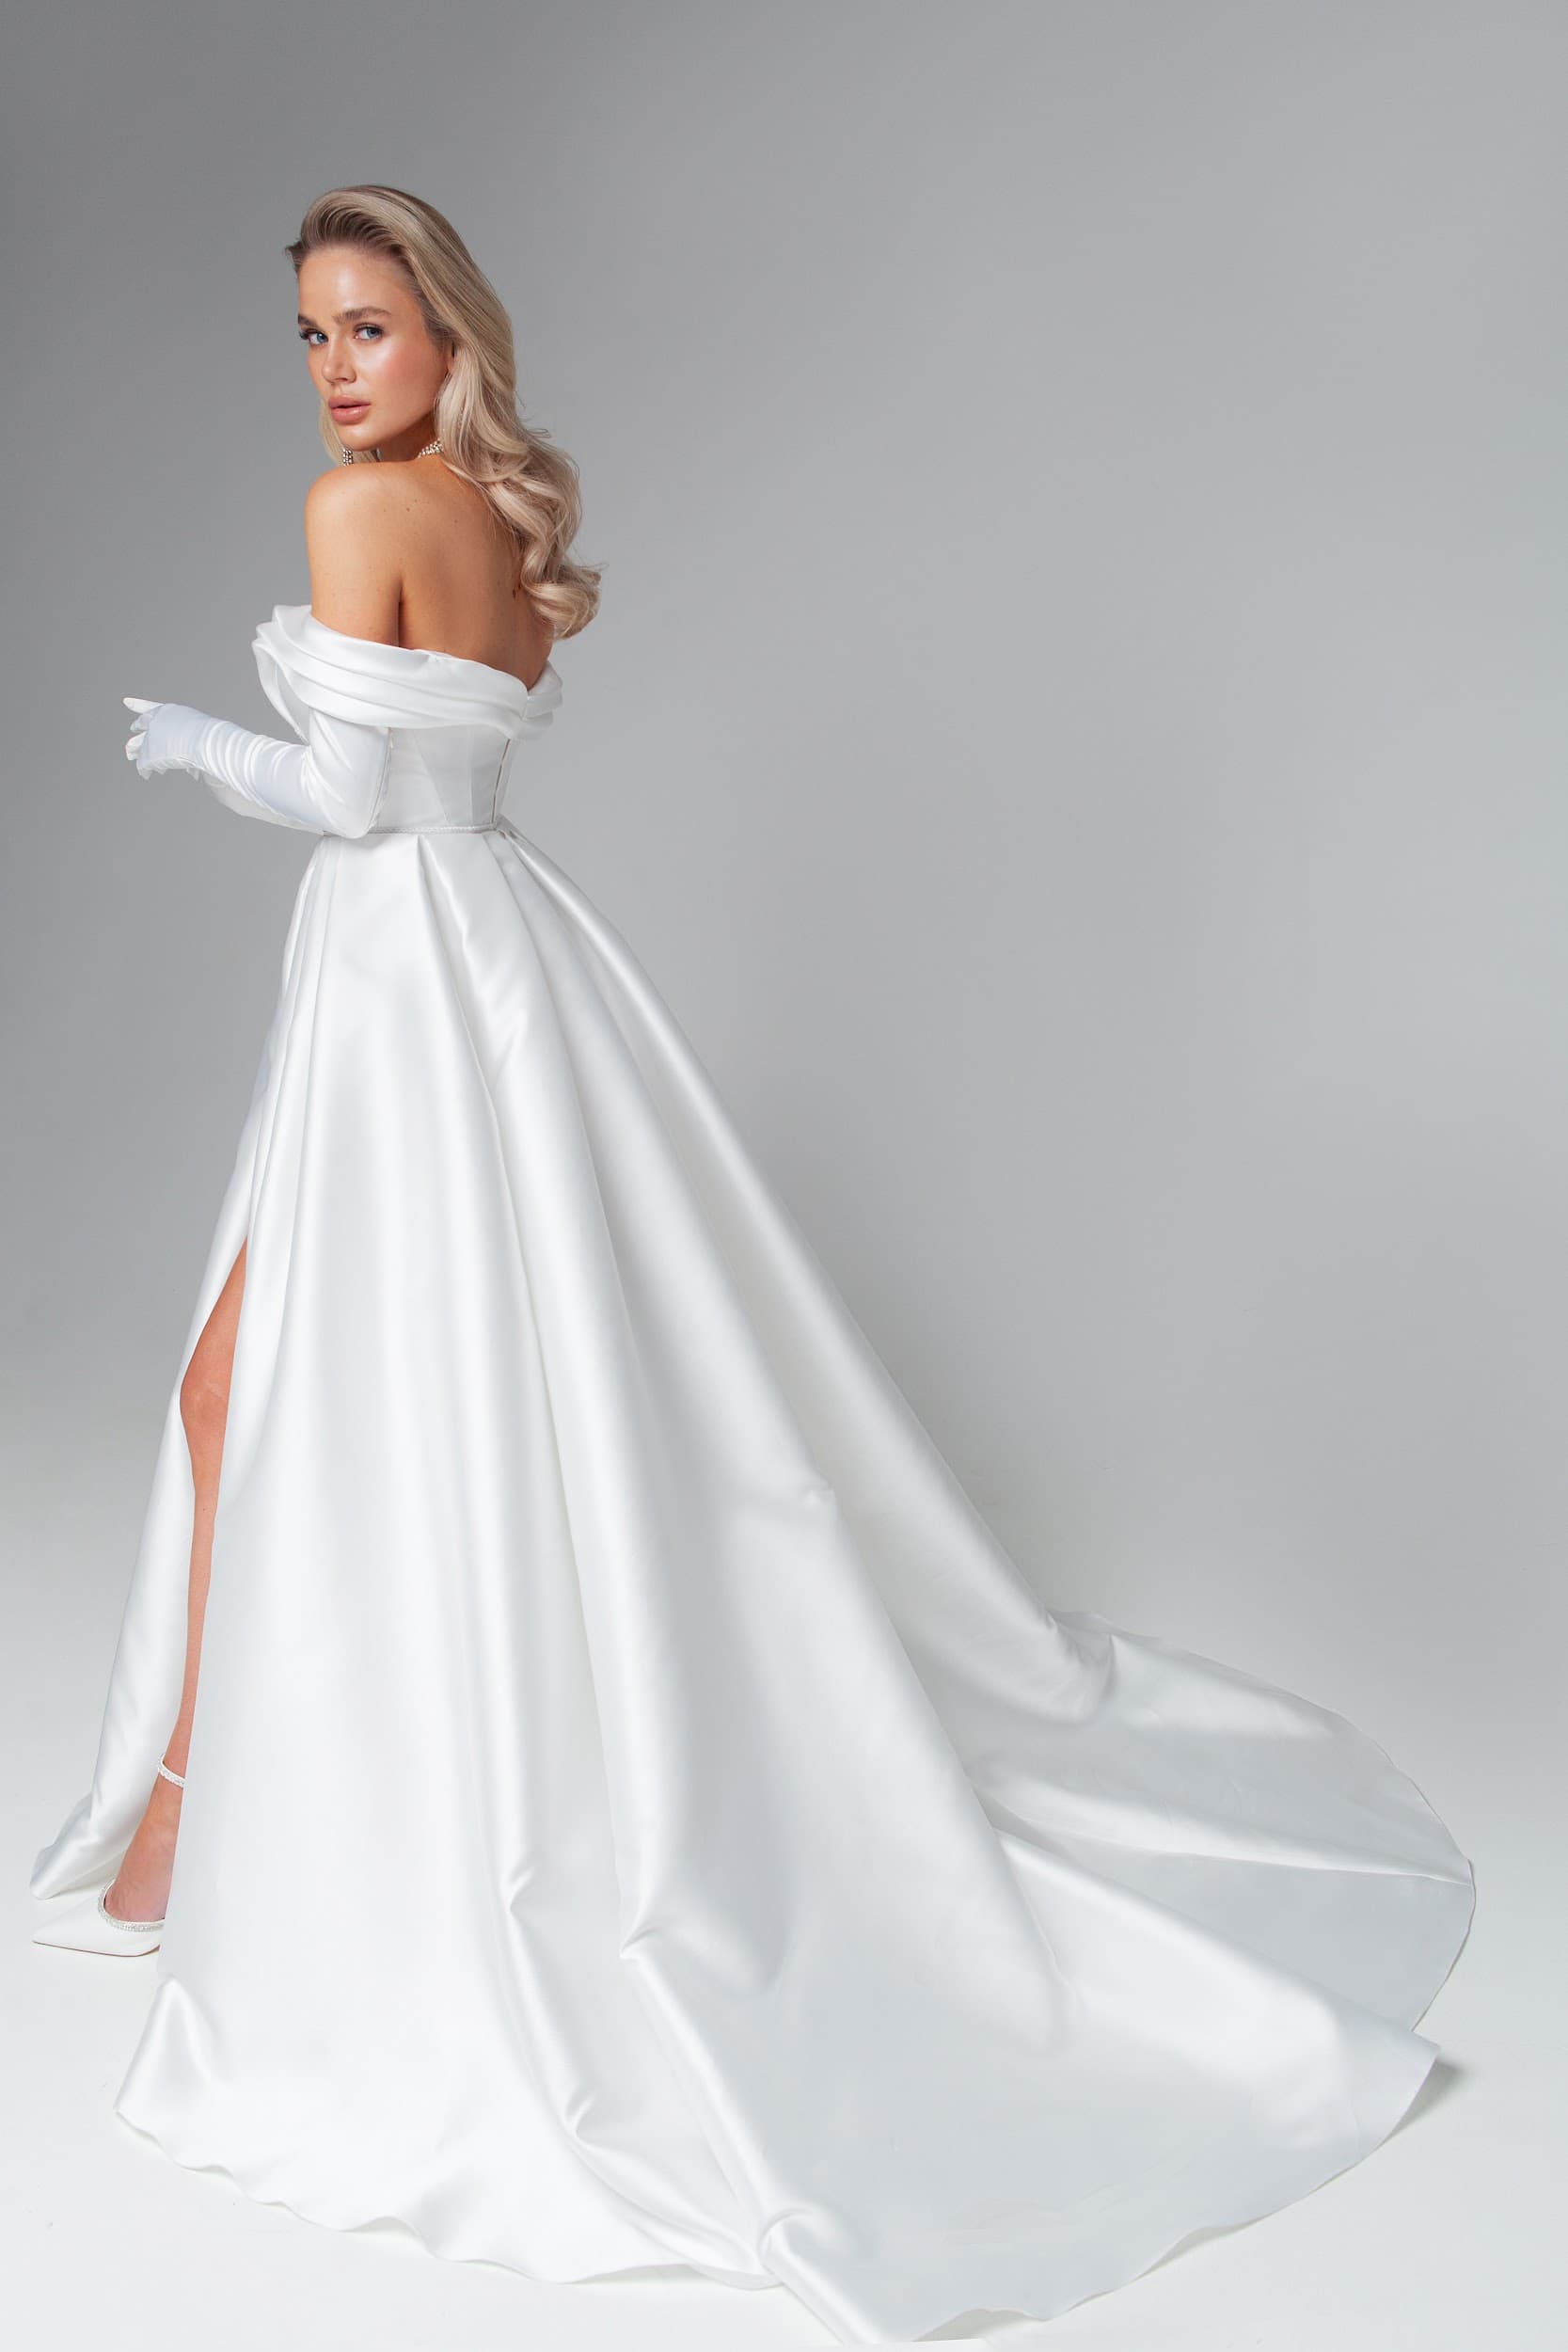 Rara Avis satin off-shoulder wedding dress Rhine at Dell'Amore Bridal, NZ. 6